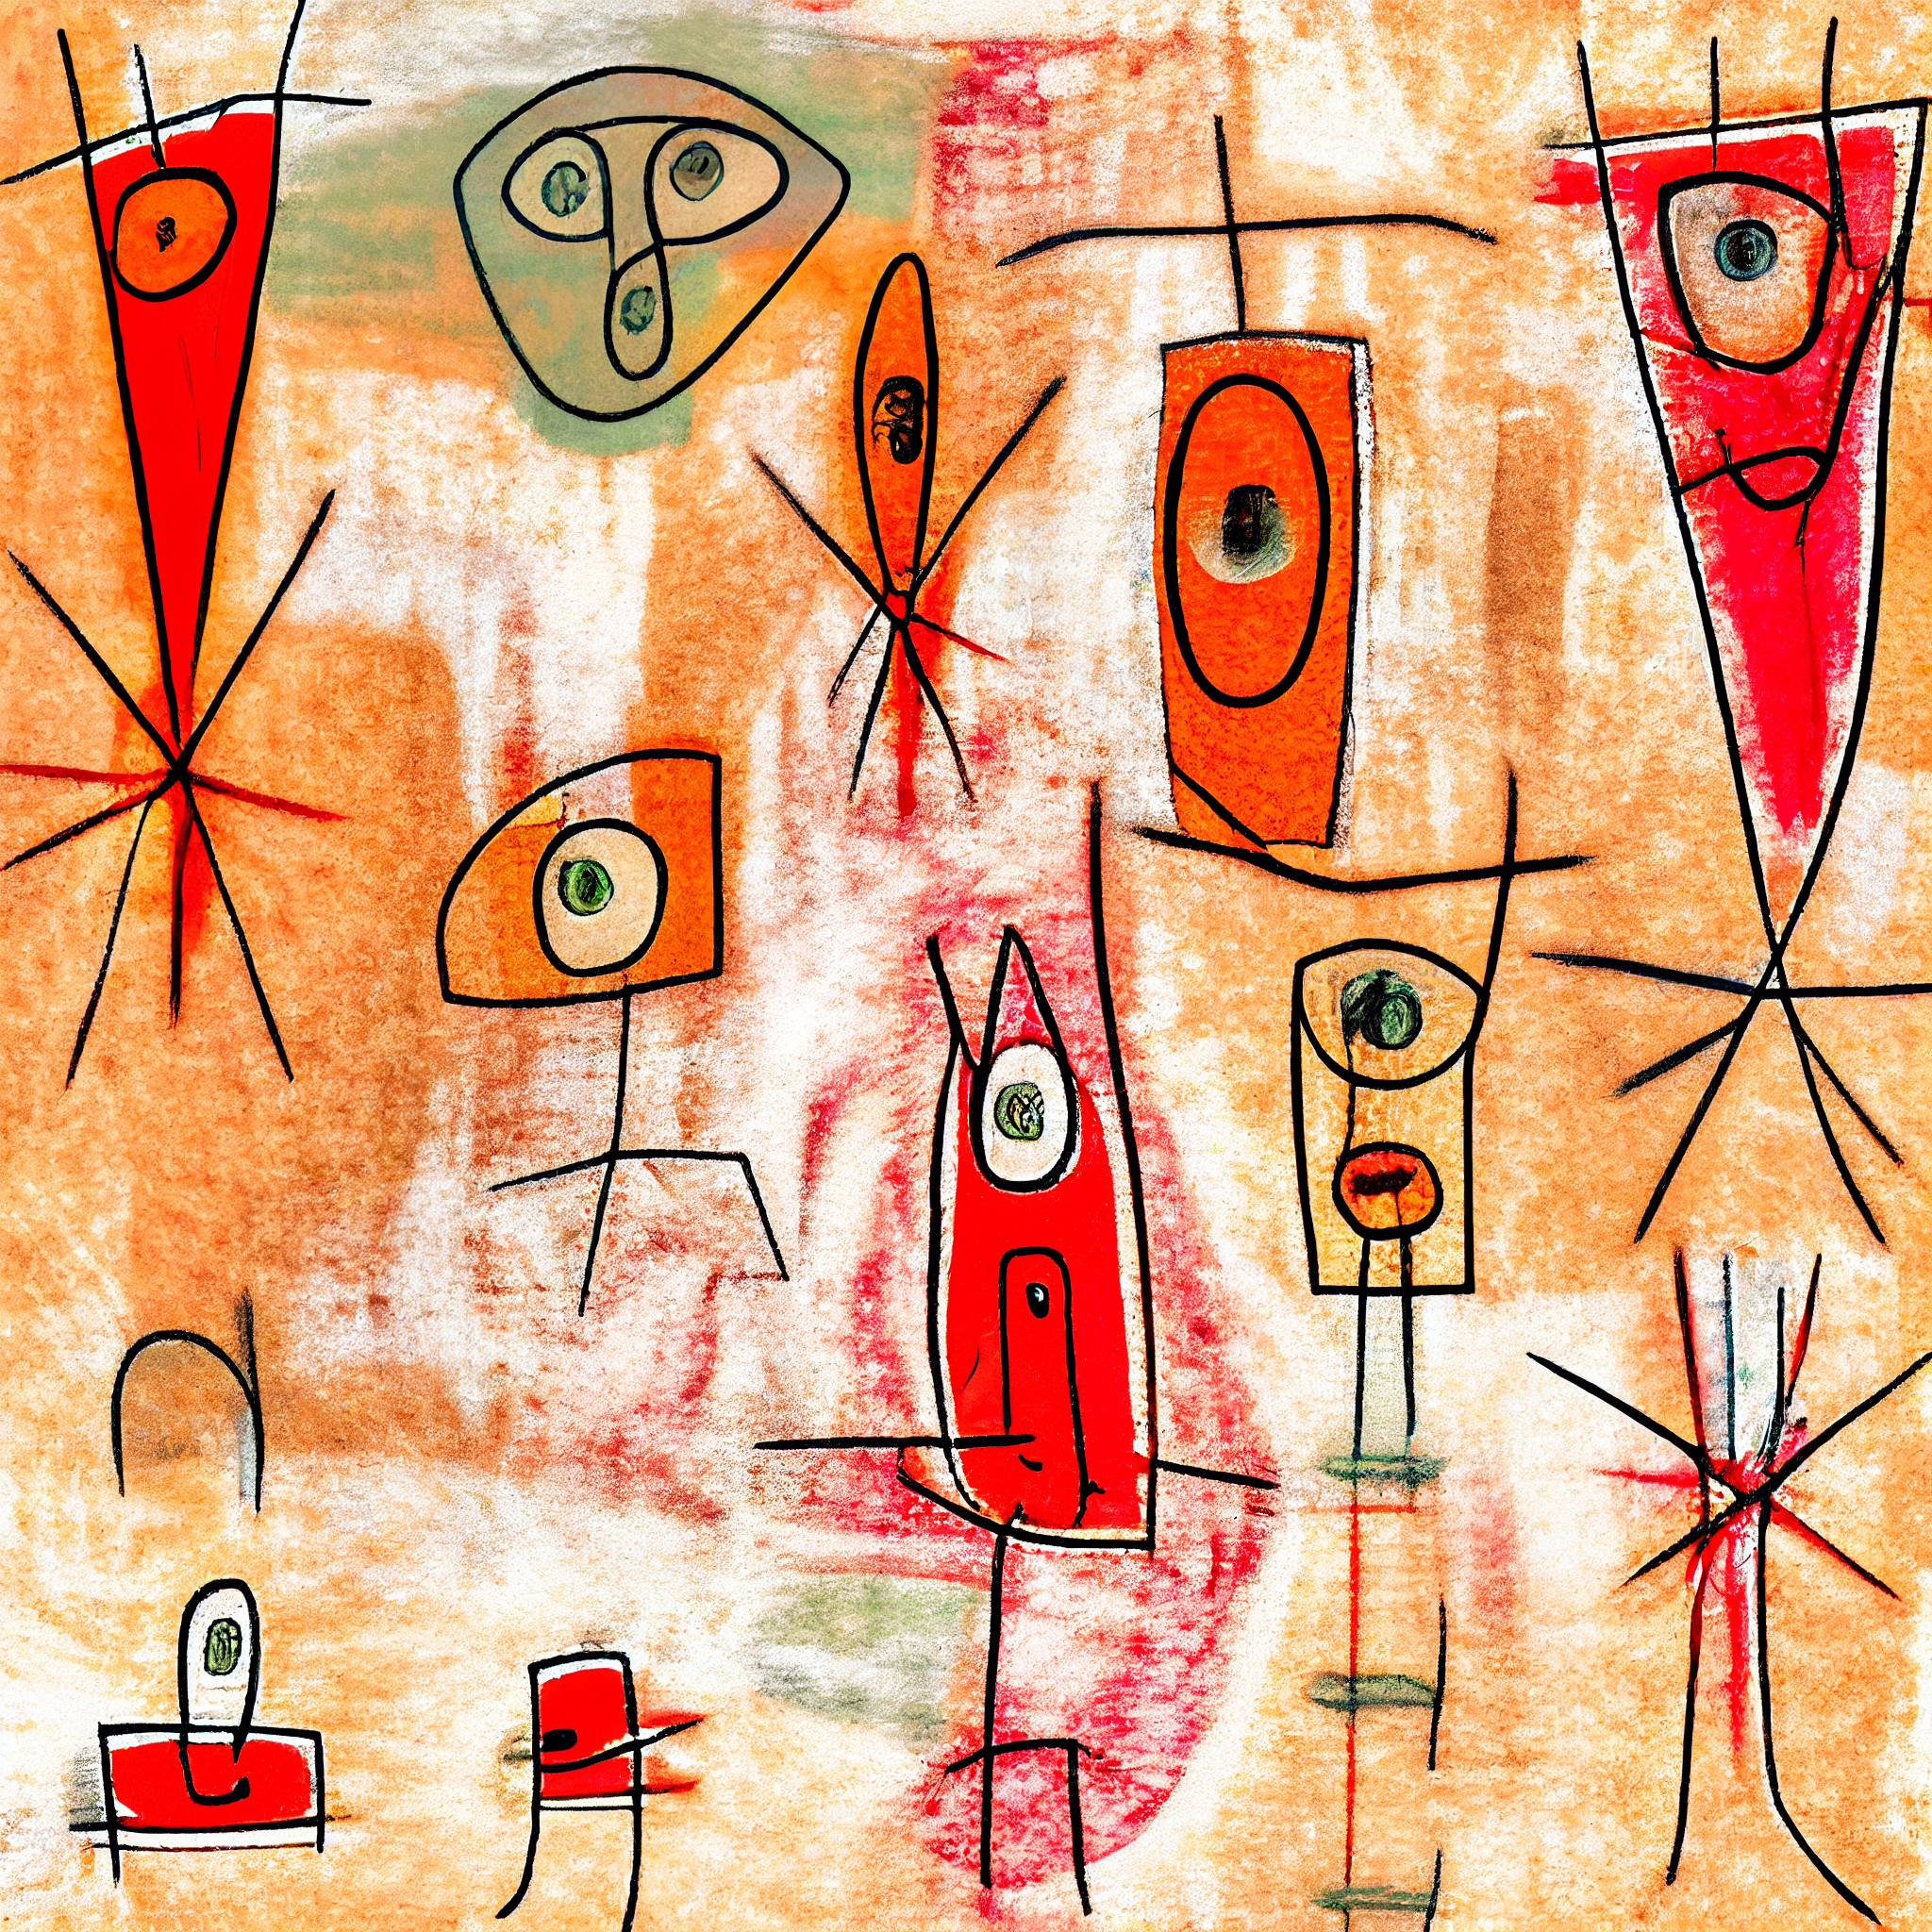 Stickmen - Paul Klee Expressionism Style